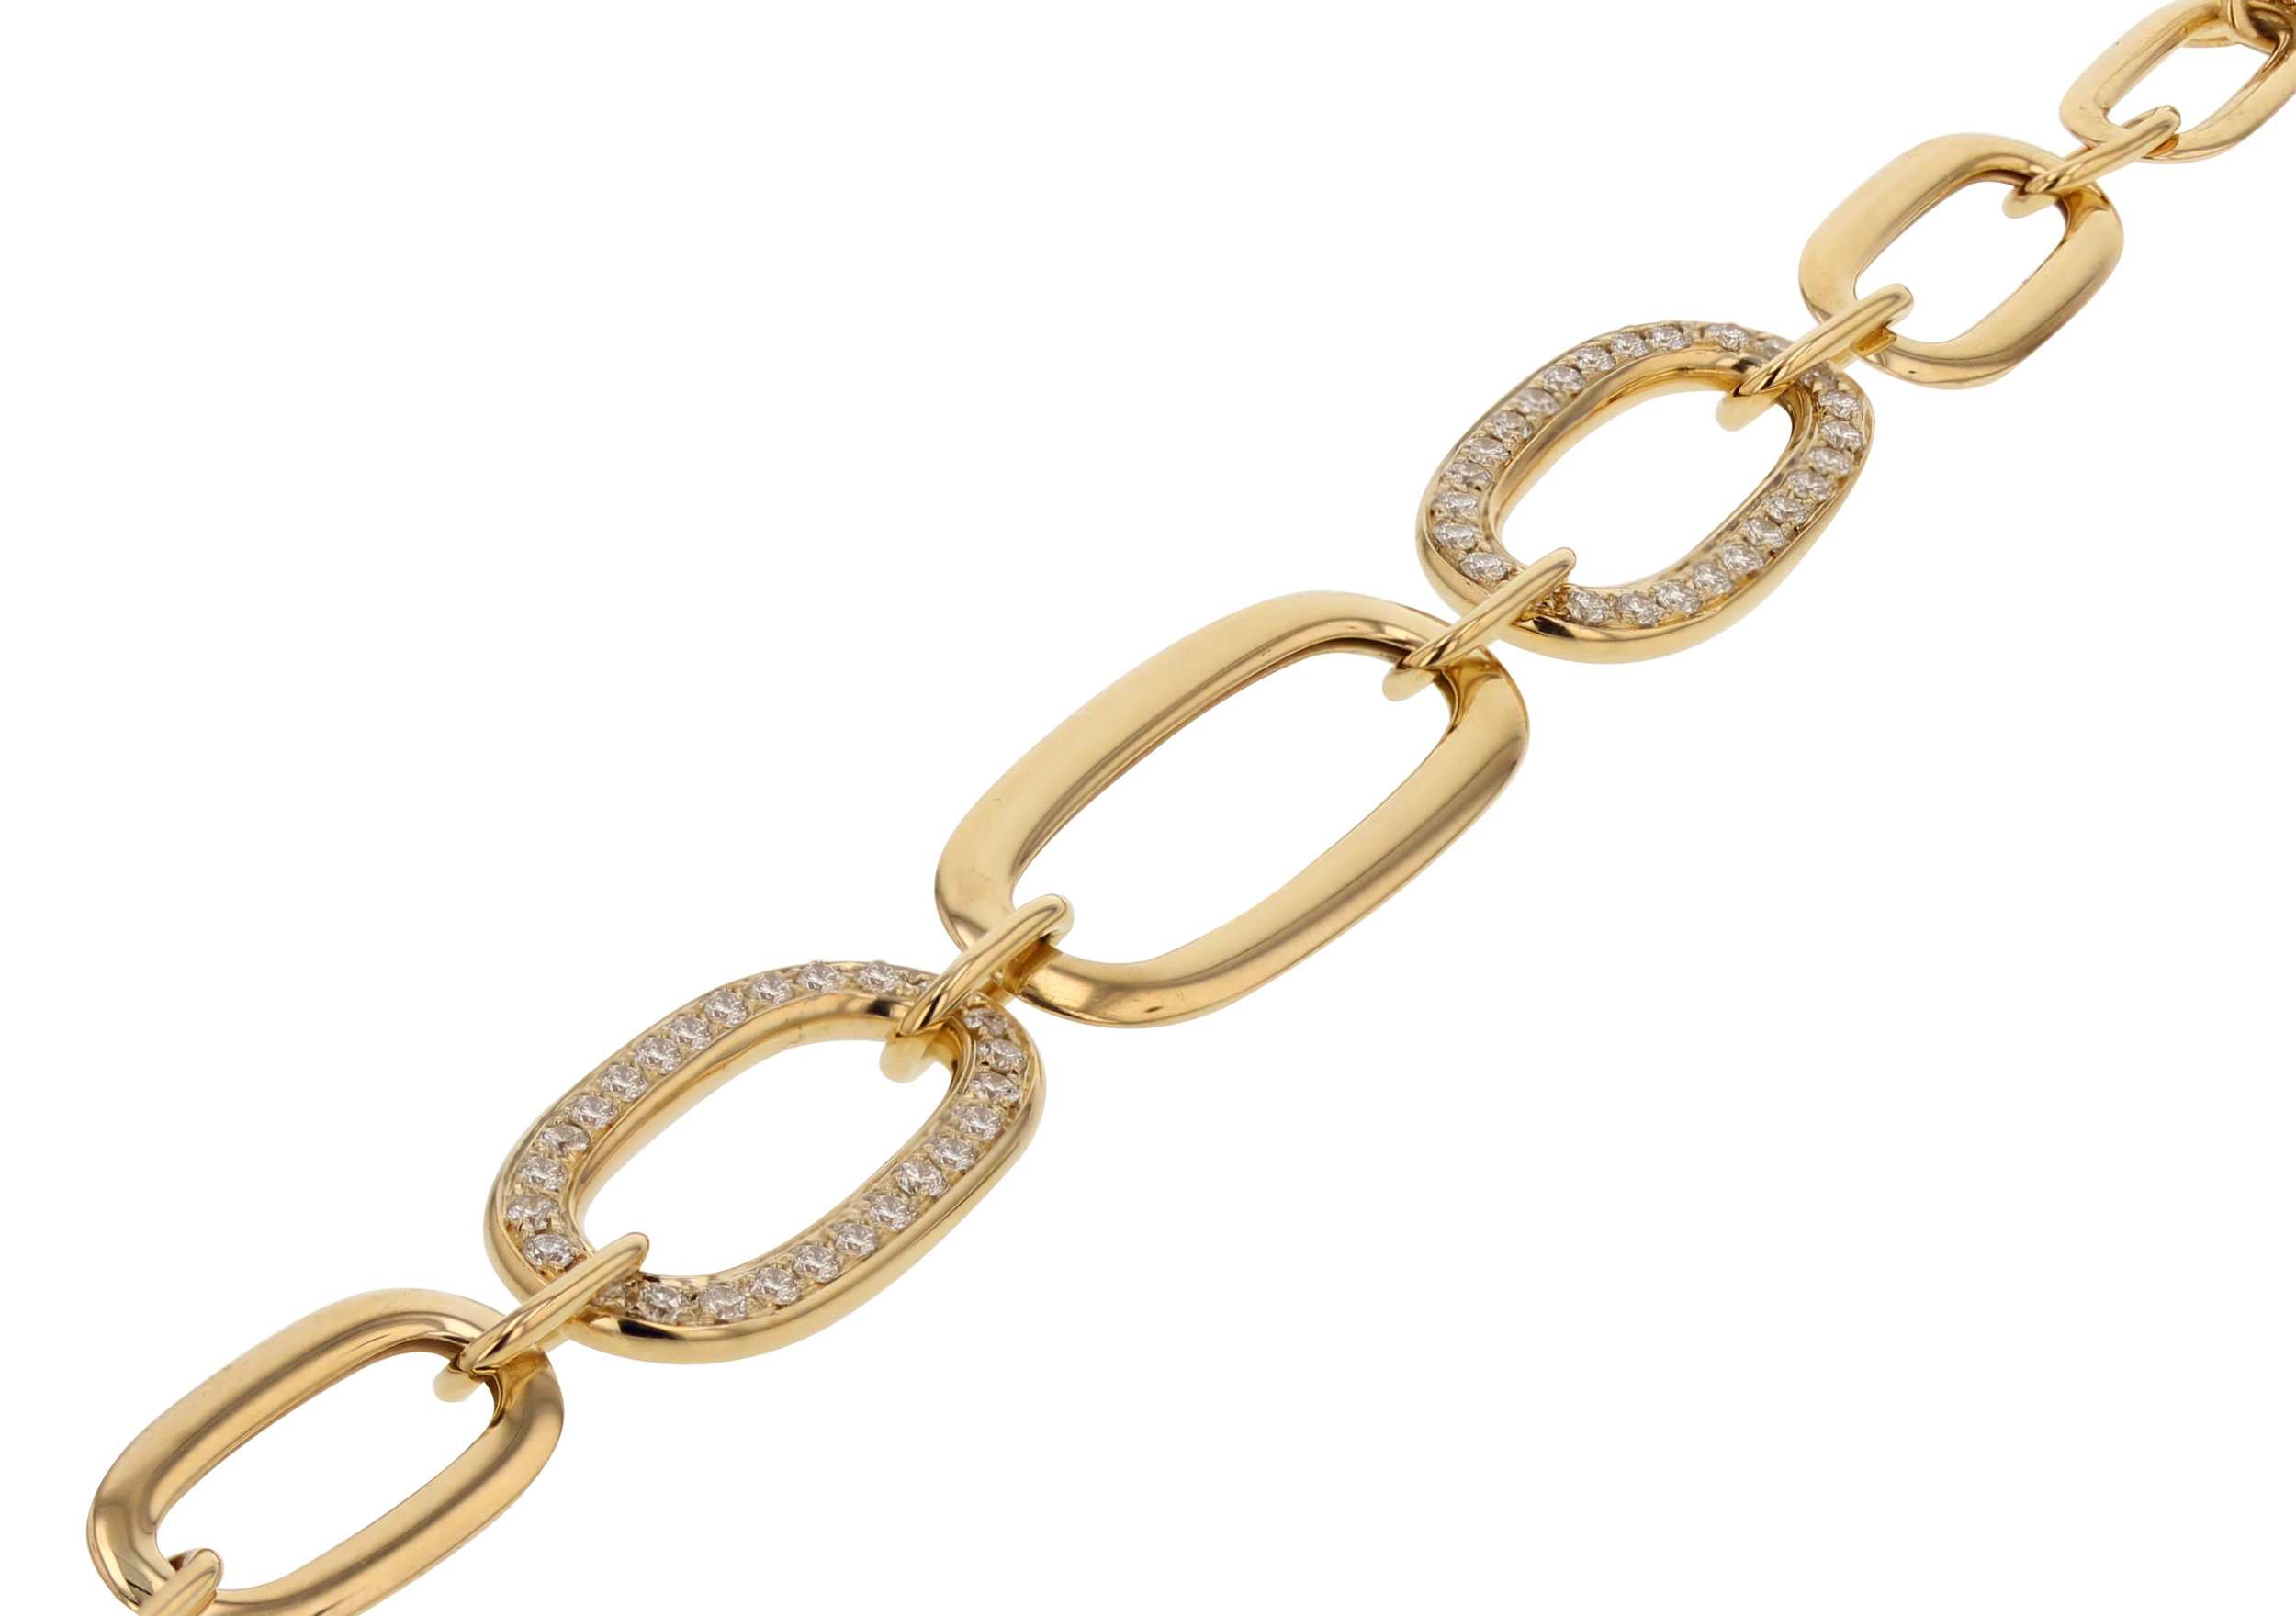 18K yellow gold "Open Link" bracelet with Diamond Pavé (0.97 ctw.) $2525